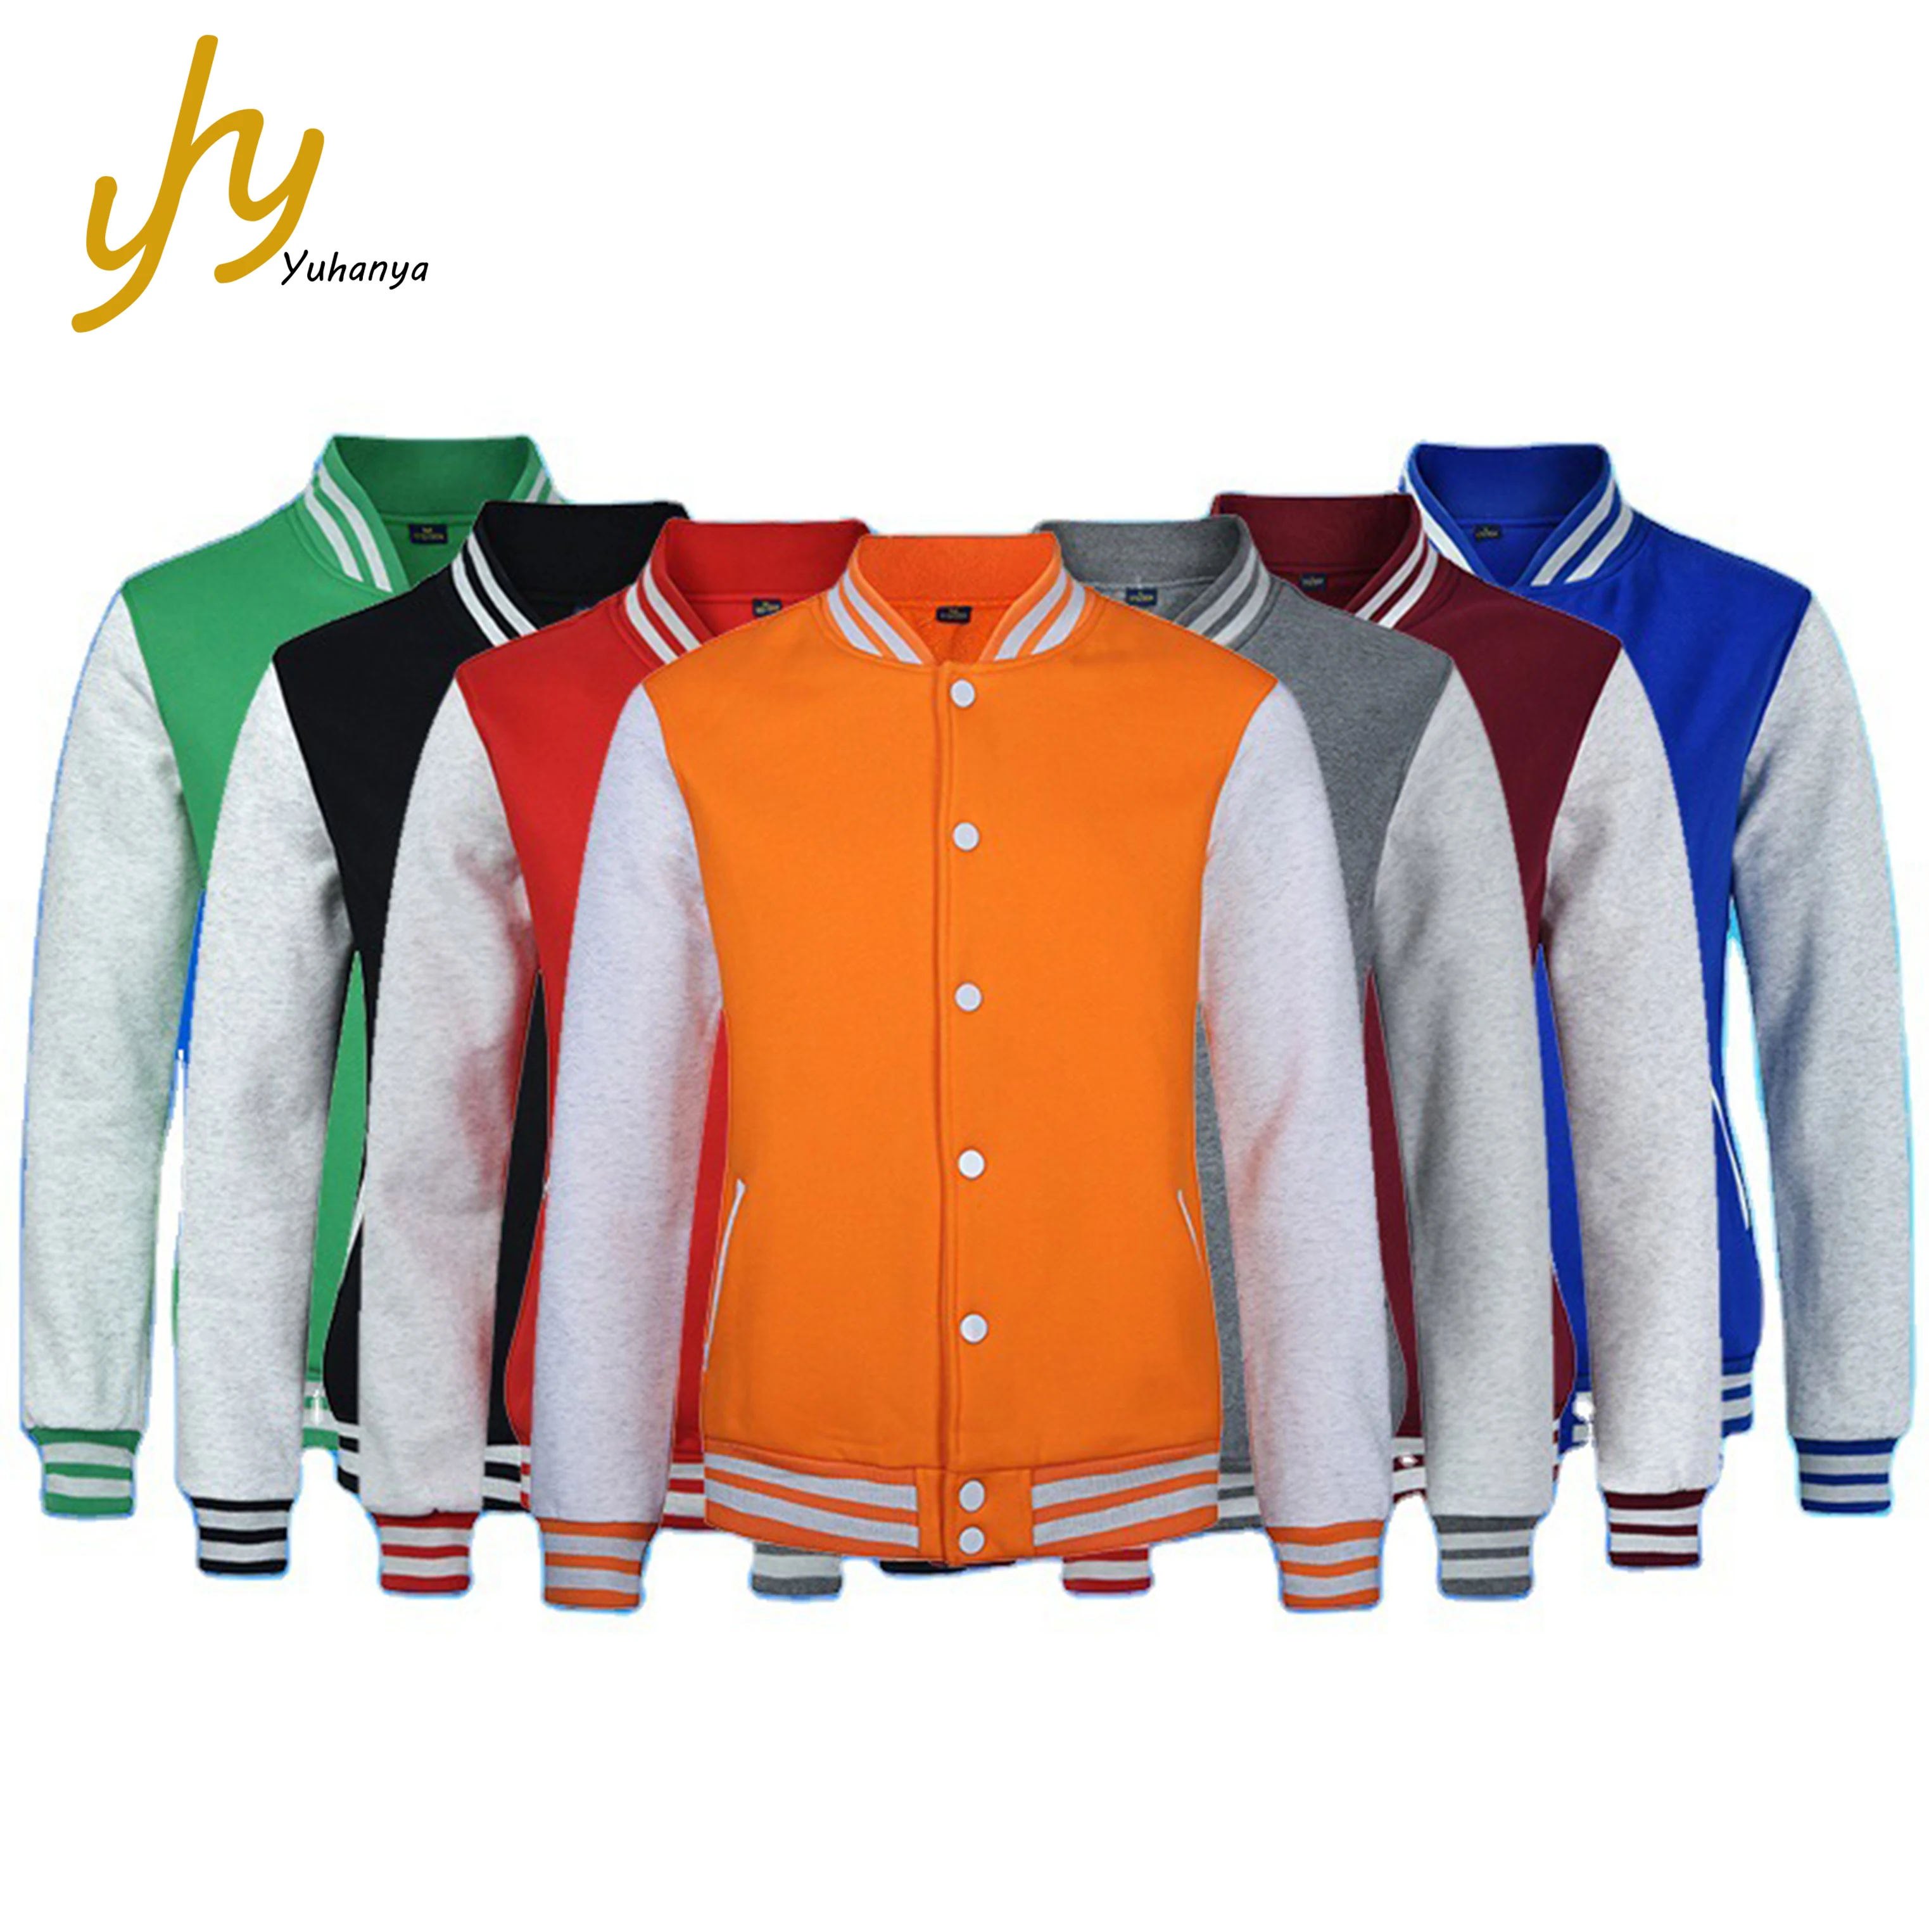 

Wholesale Cheap Price Many Color Custom Brand Plain University Student Wear Cotton Baseball Varsity Jackets, 14 colors